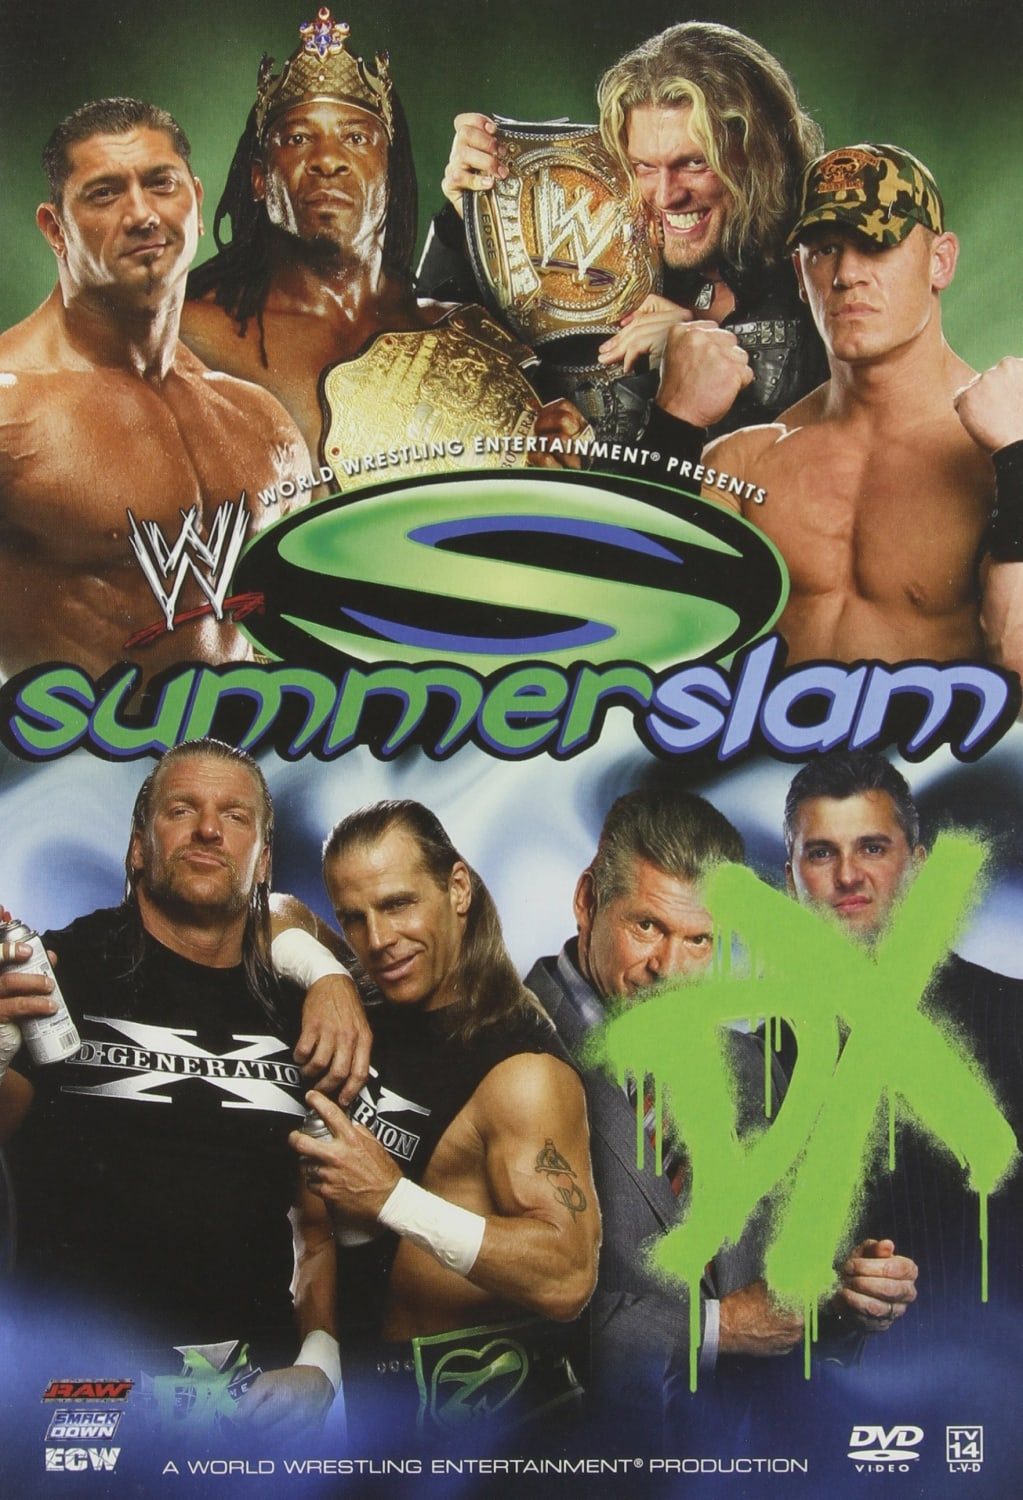 WWE Summerslam (DVD) on MovieShack